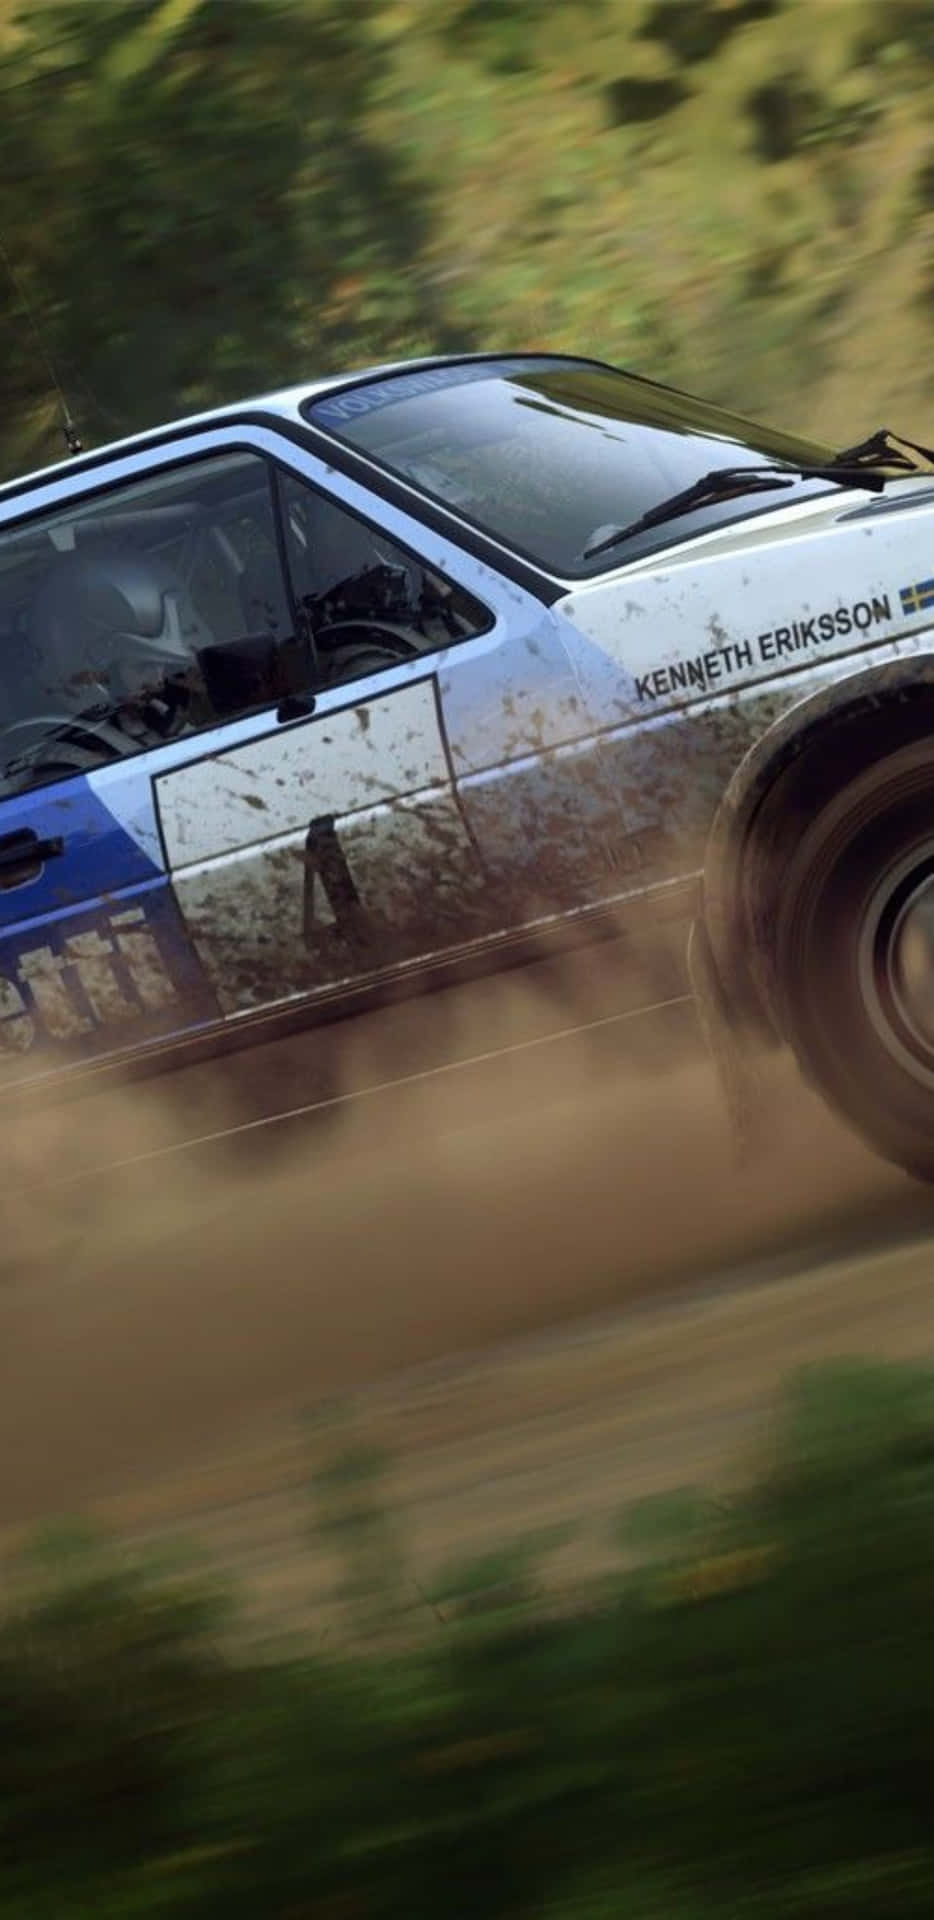 A Rally Car Driving Down A Dirt Road